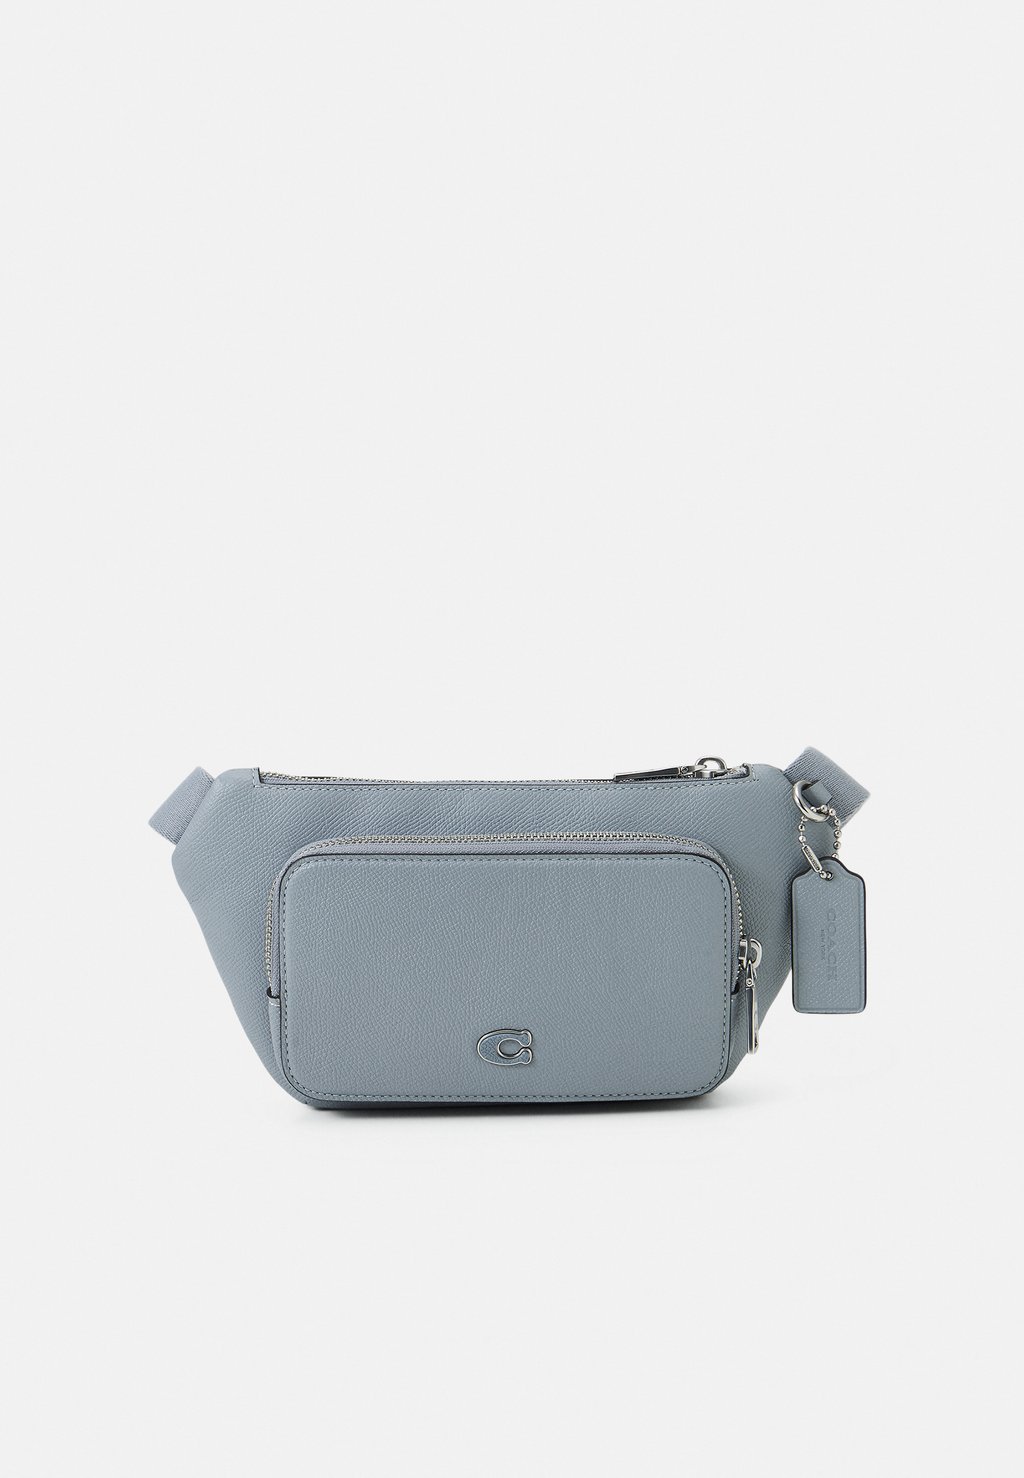 Поясная сумка BELT BAG IN CROSSGRAIN Coach, серо-синий клатч coach pouch in crossgrain белый